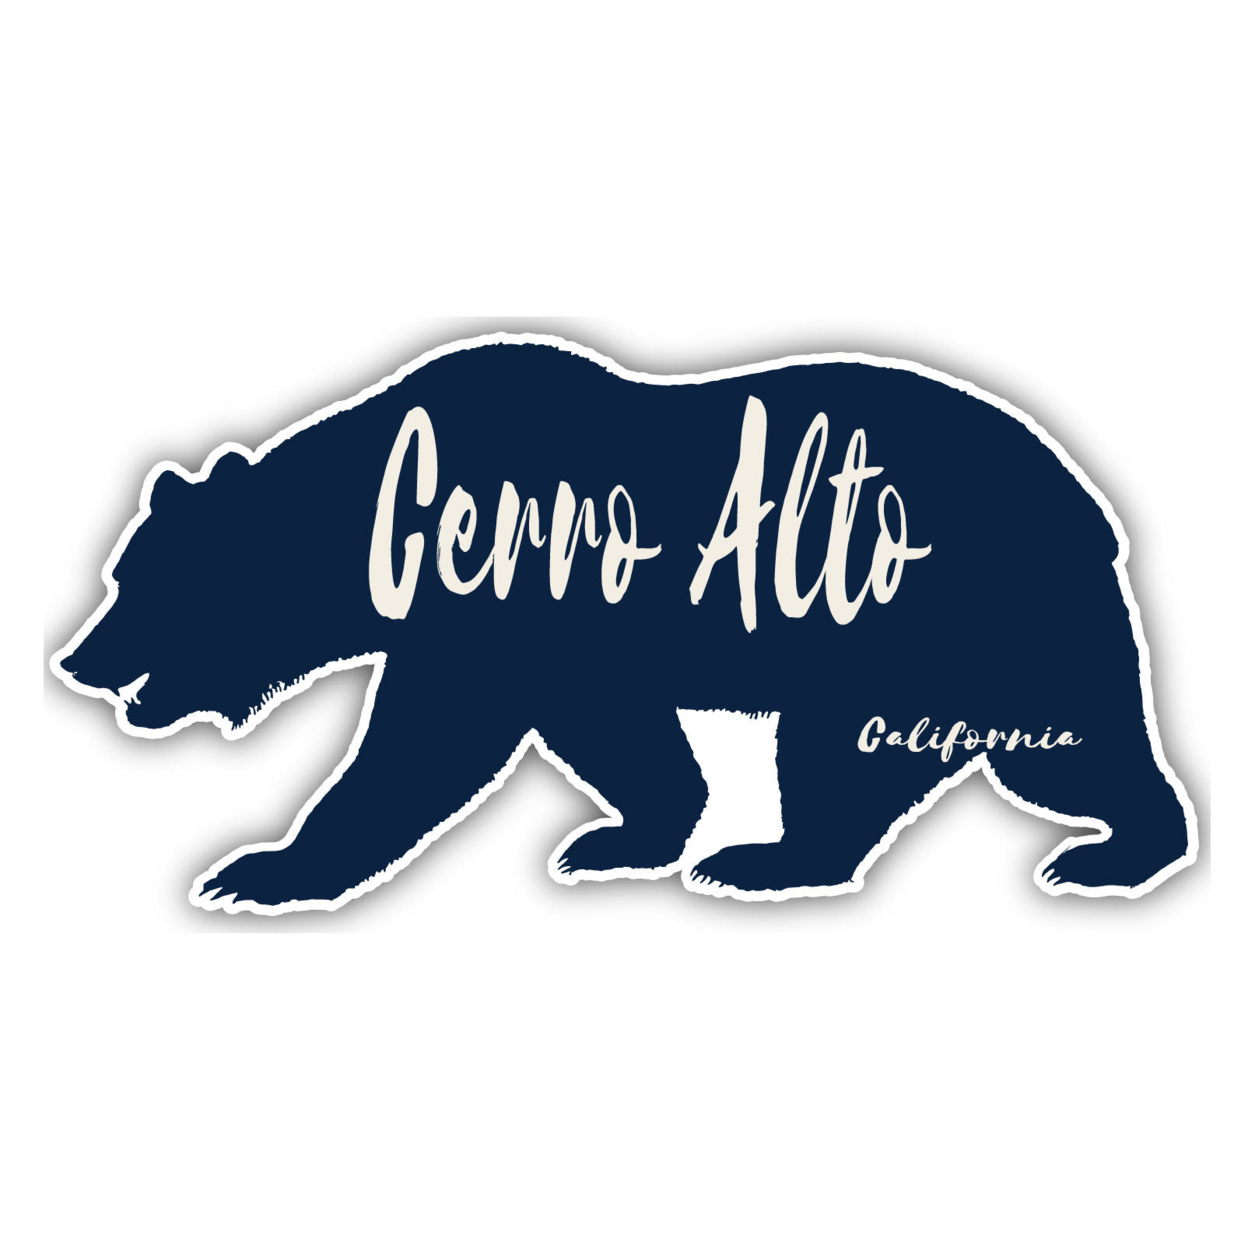 Cerro Alto California Souvenir Decorative Stickers (Choose Theme And Size) - 4-Pack, 6-Inch, Bear